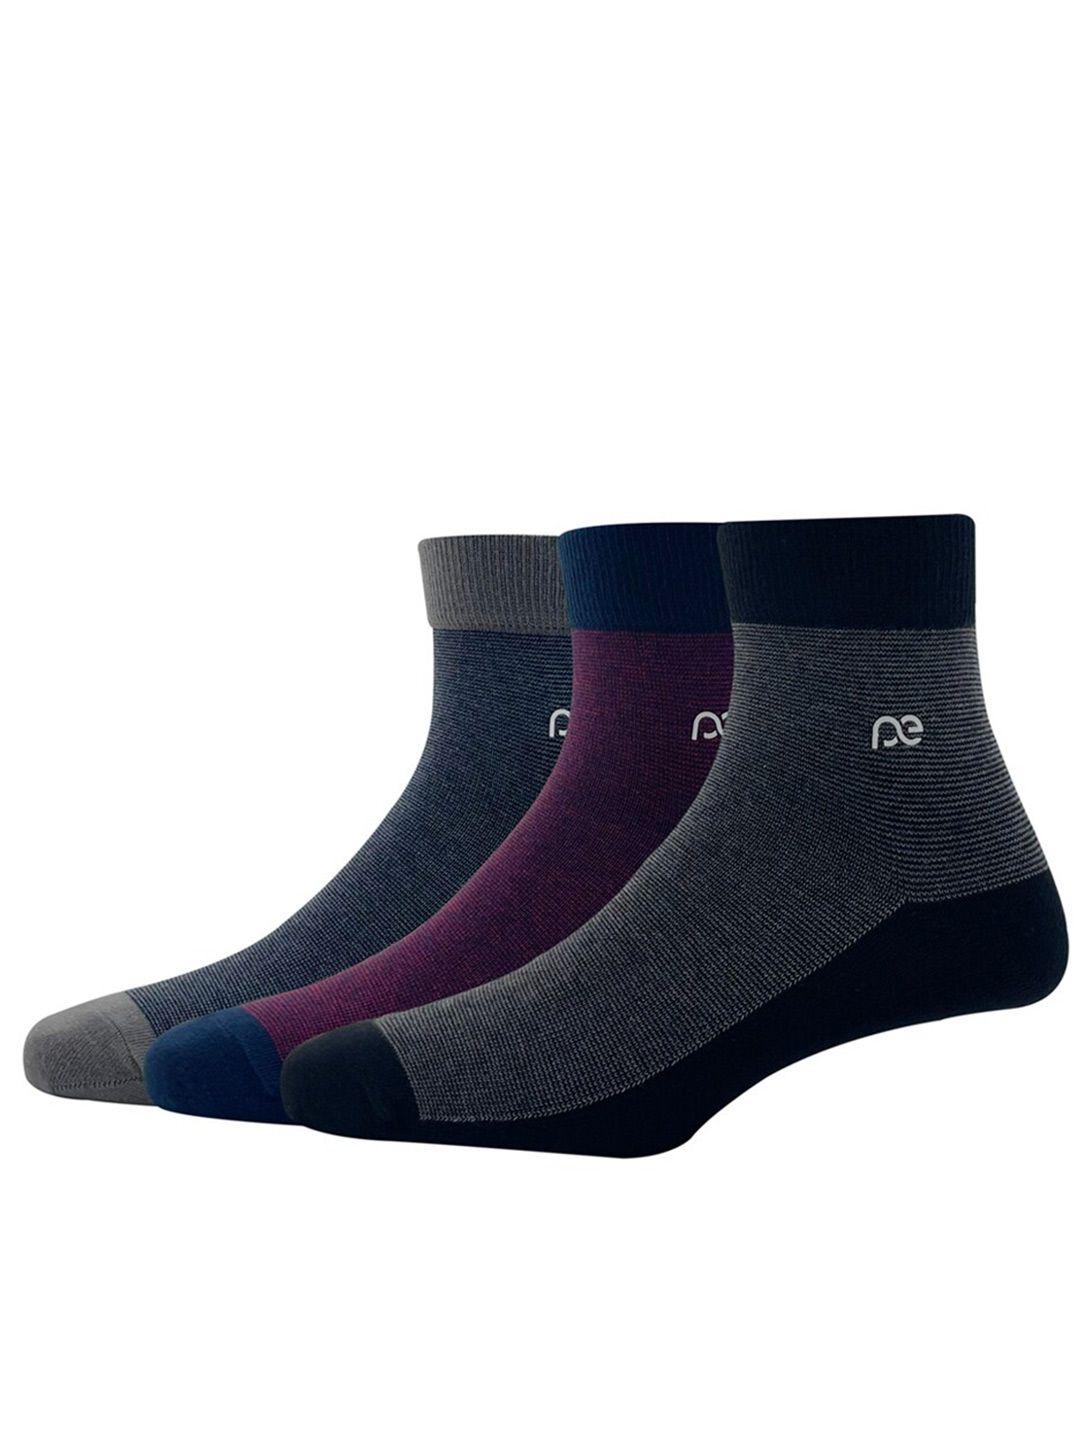 peter-england-men-pack-of-3-colourblocked-pattern-above-ankle-socks